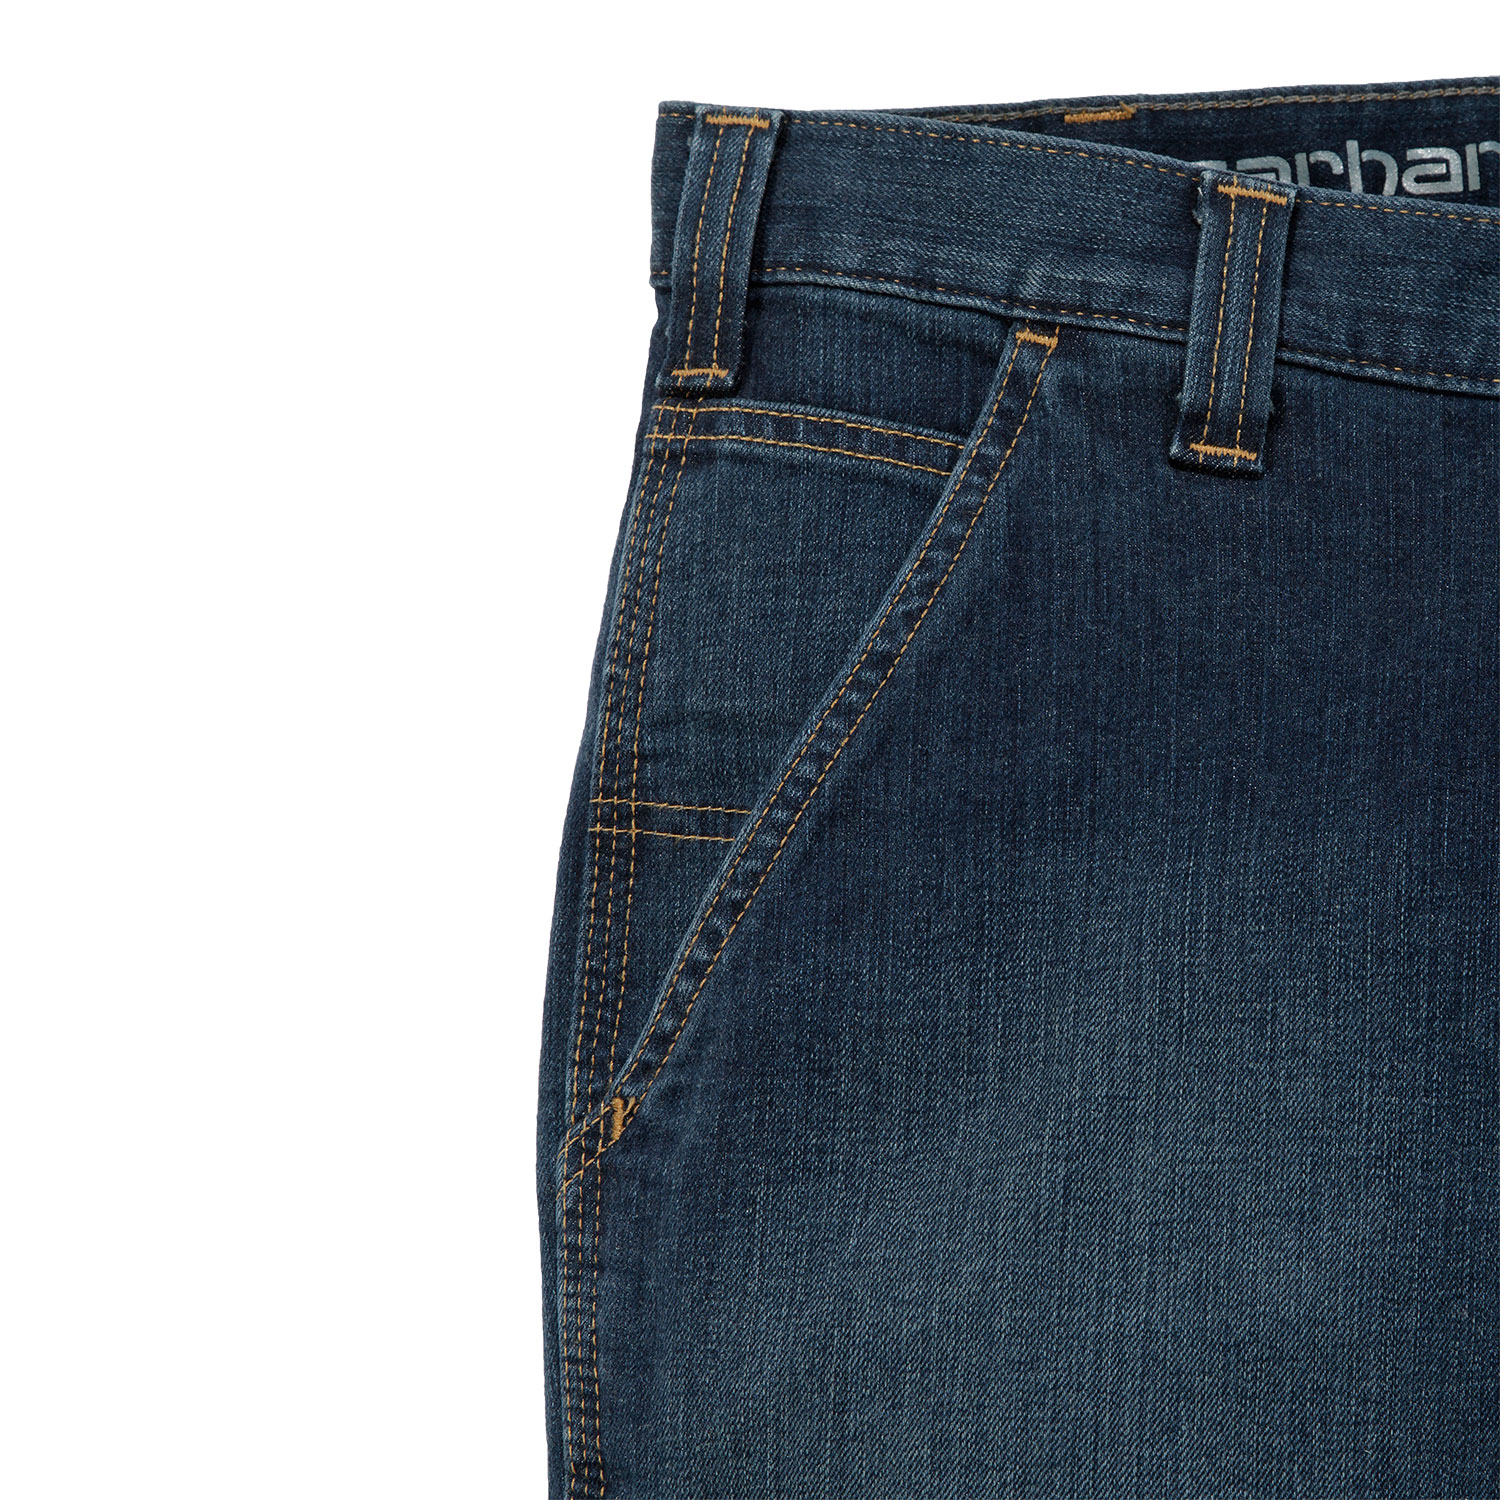 Carhartt Rugged Flex Dungaree Jeans - 7